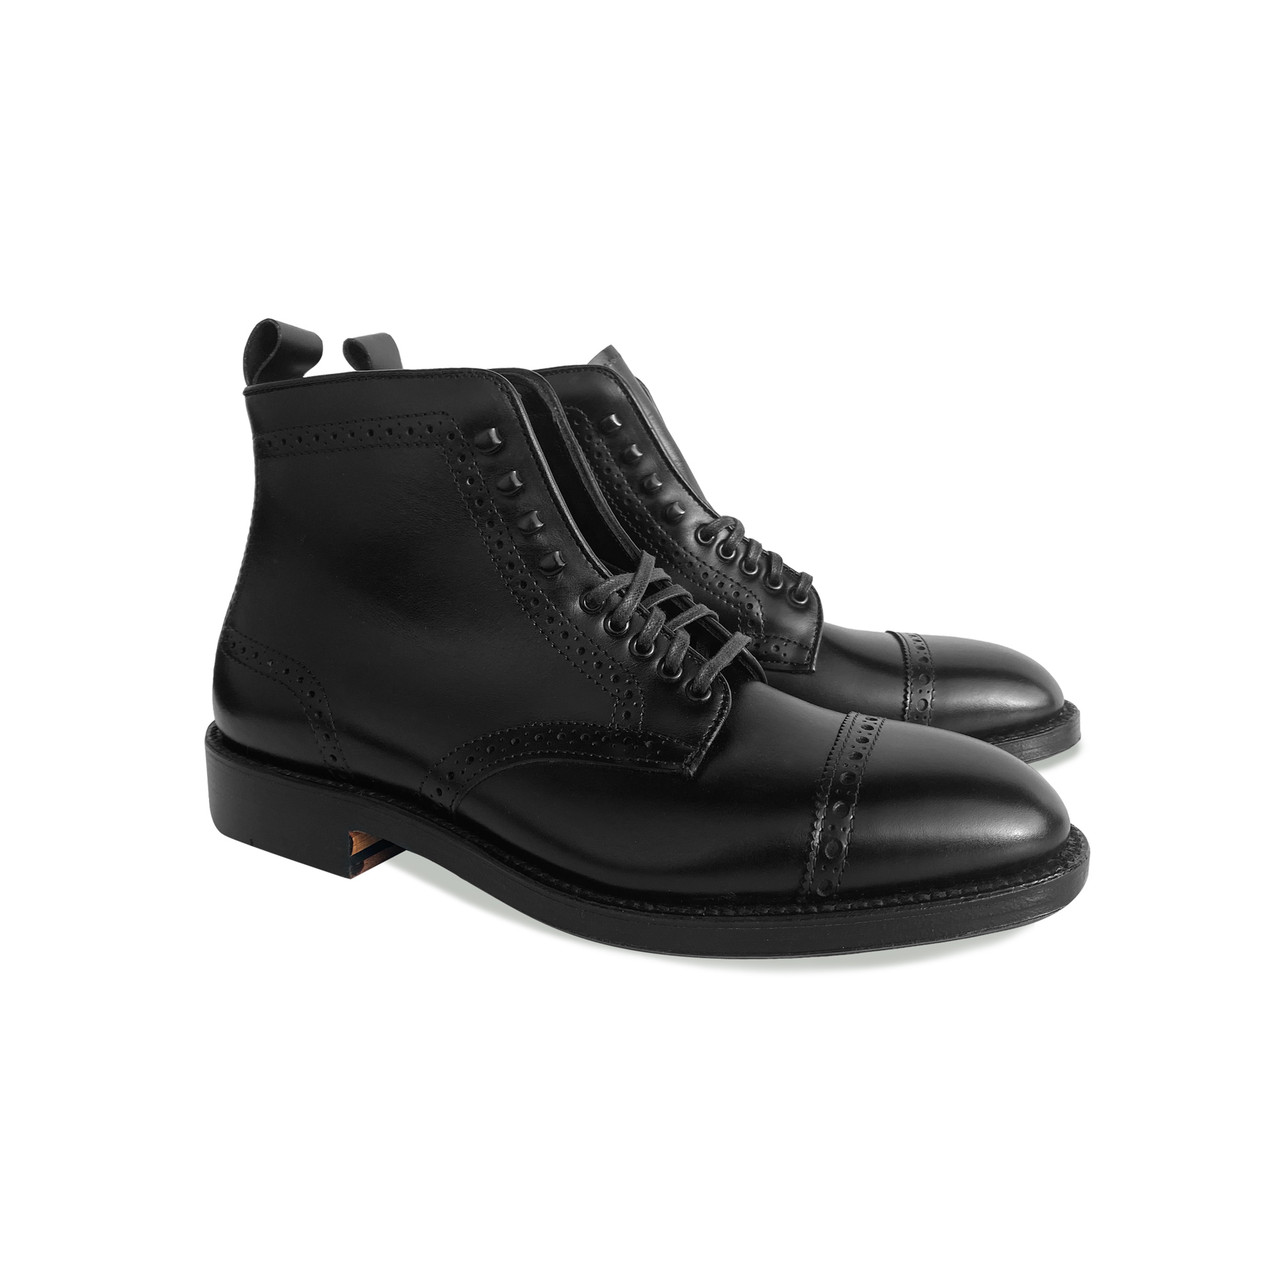 Alden Pelle Line exclusive D7827H 5 Eyelet Perforated cap toe boot- Black